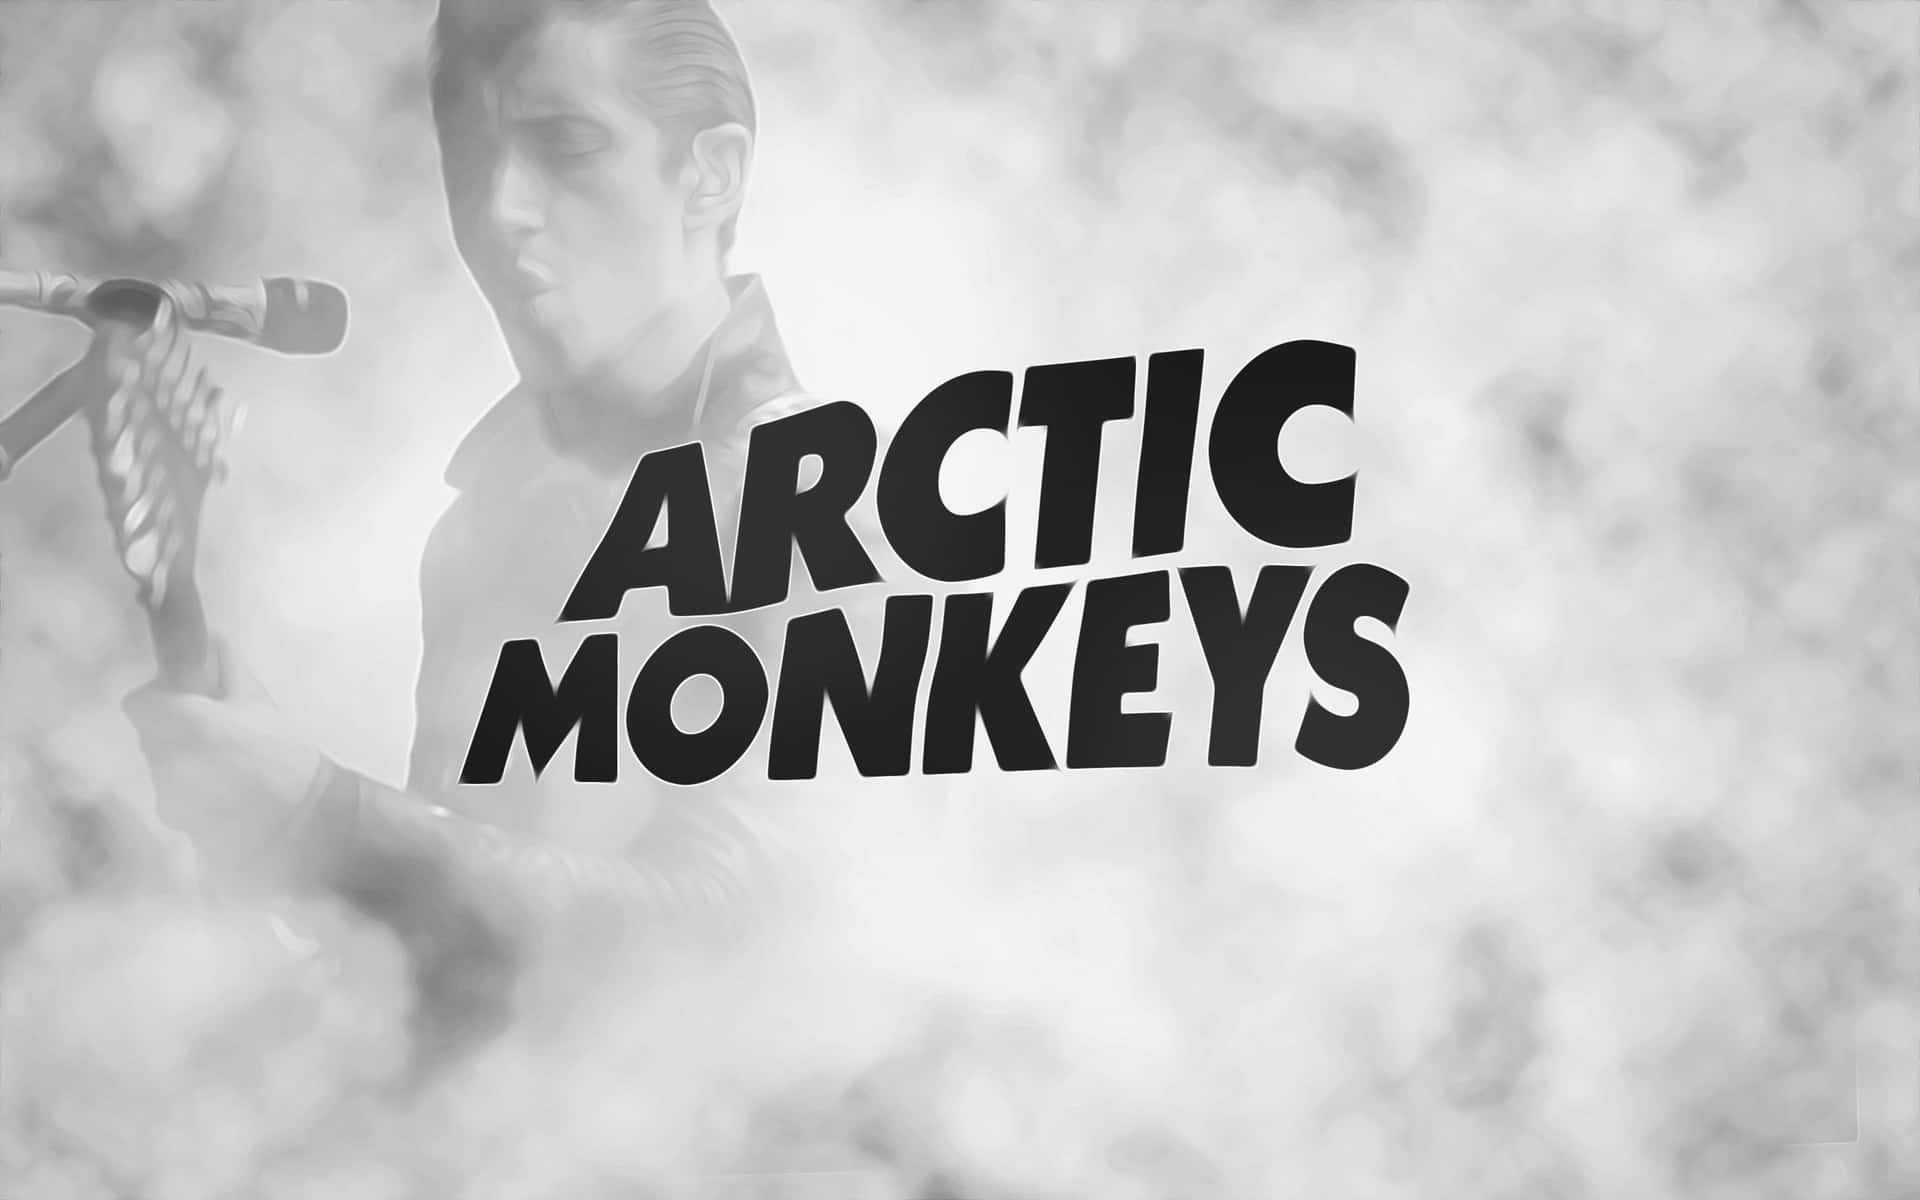 Arctic Monkeys Live Performance Background